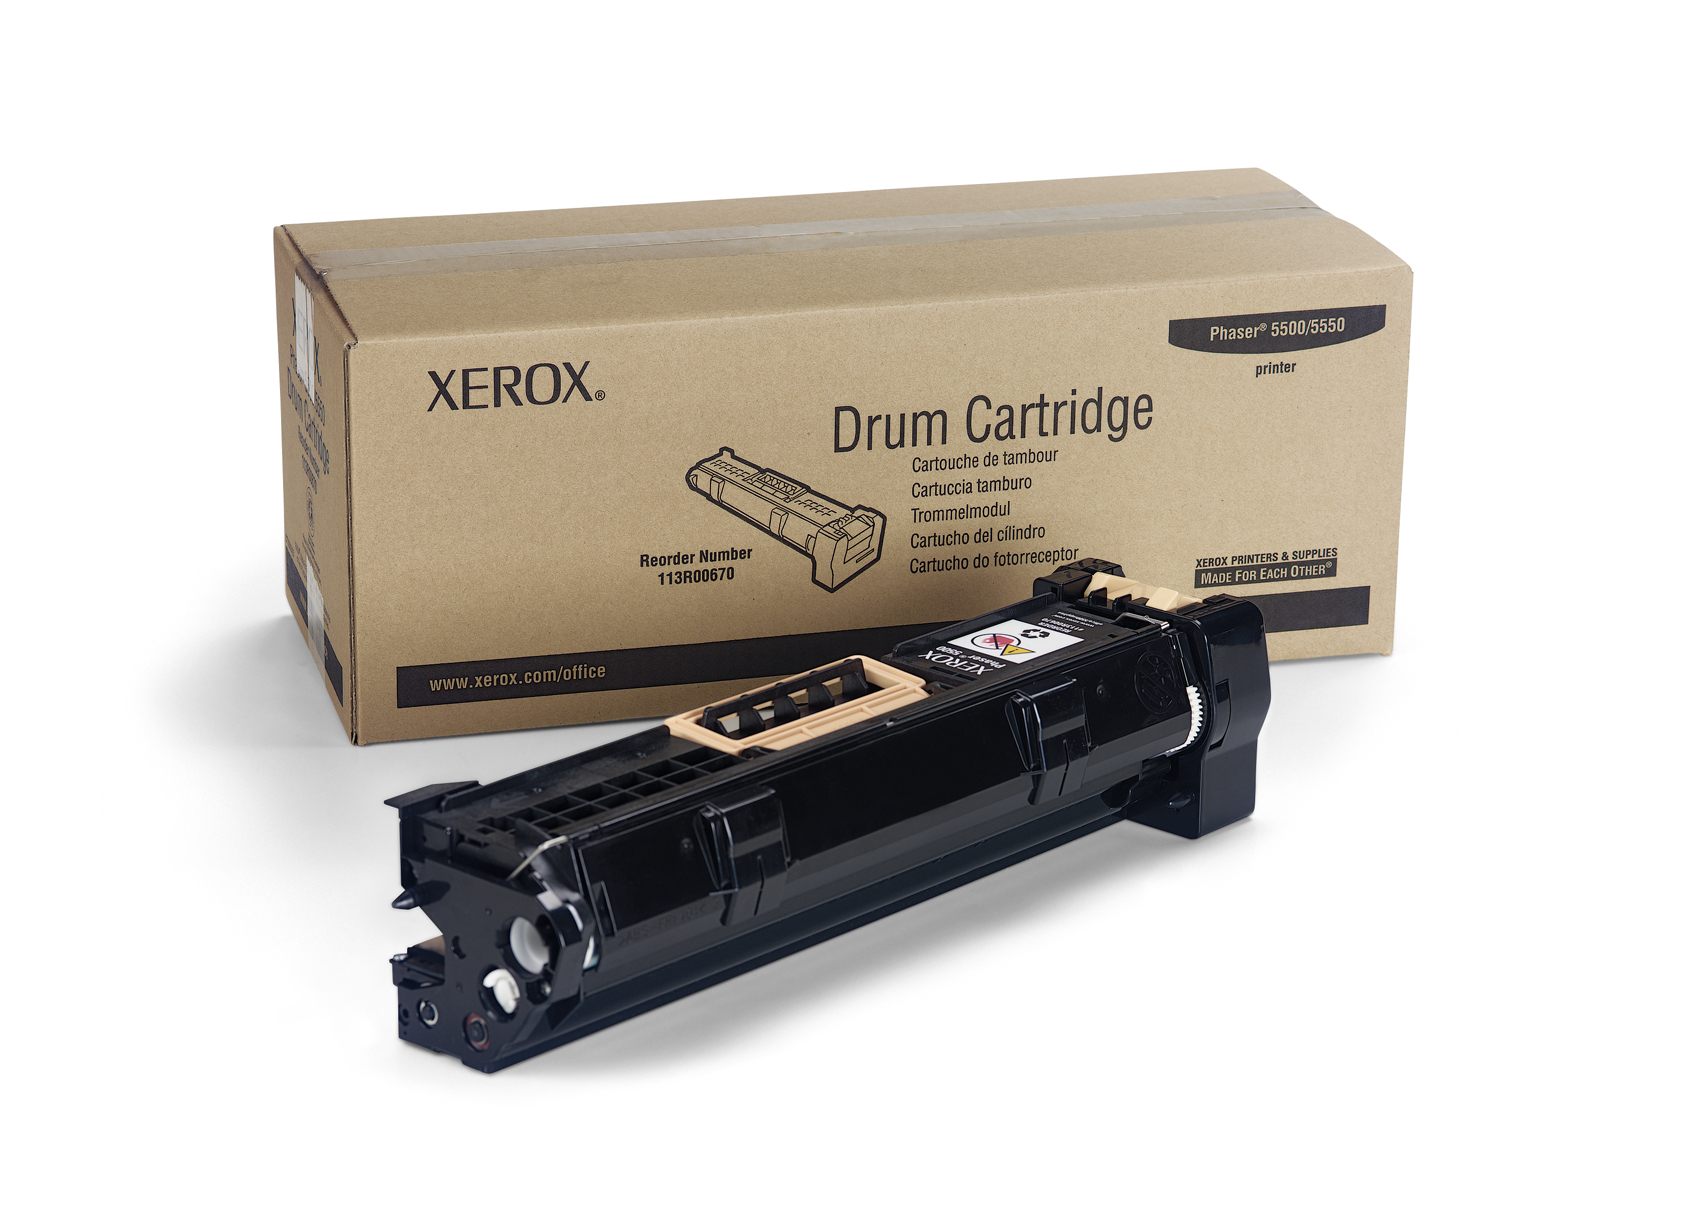 DRUM CARTRIDGE 113R00670 Genuine Xerox Supplies